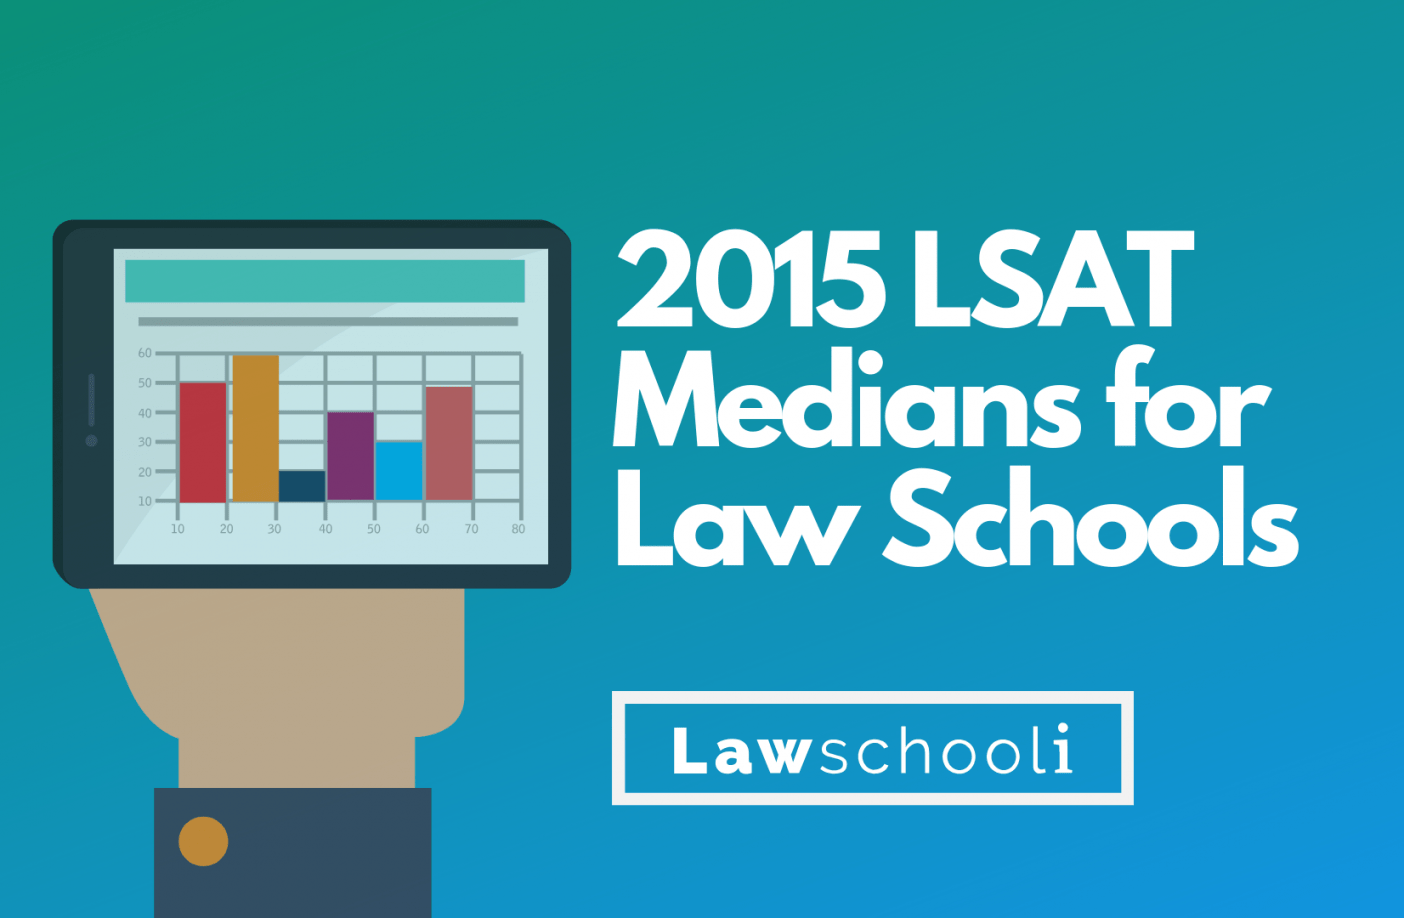 LSAT Medians For Law Schools 2015 LawSchooli